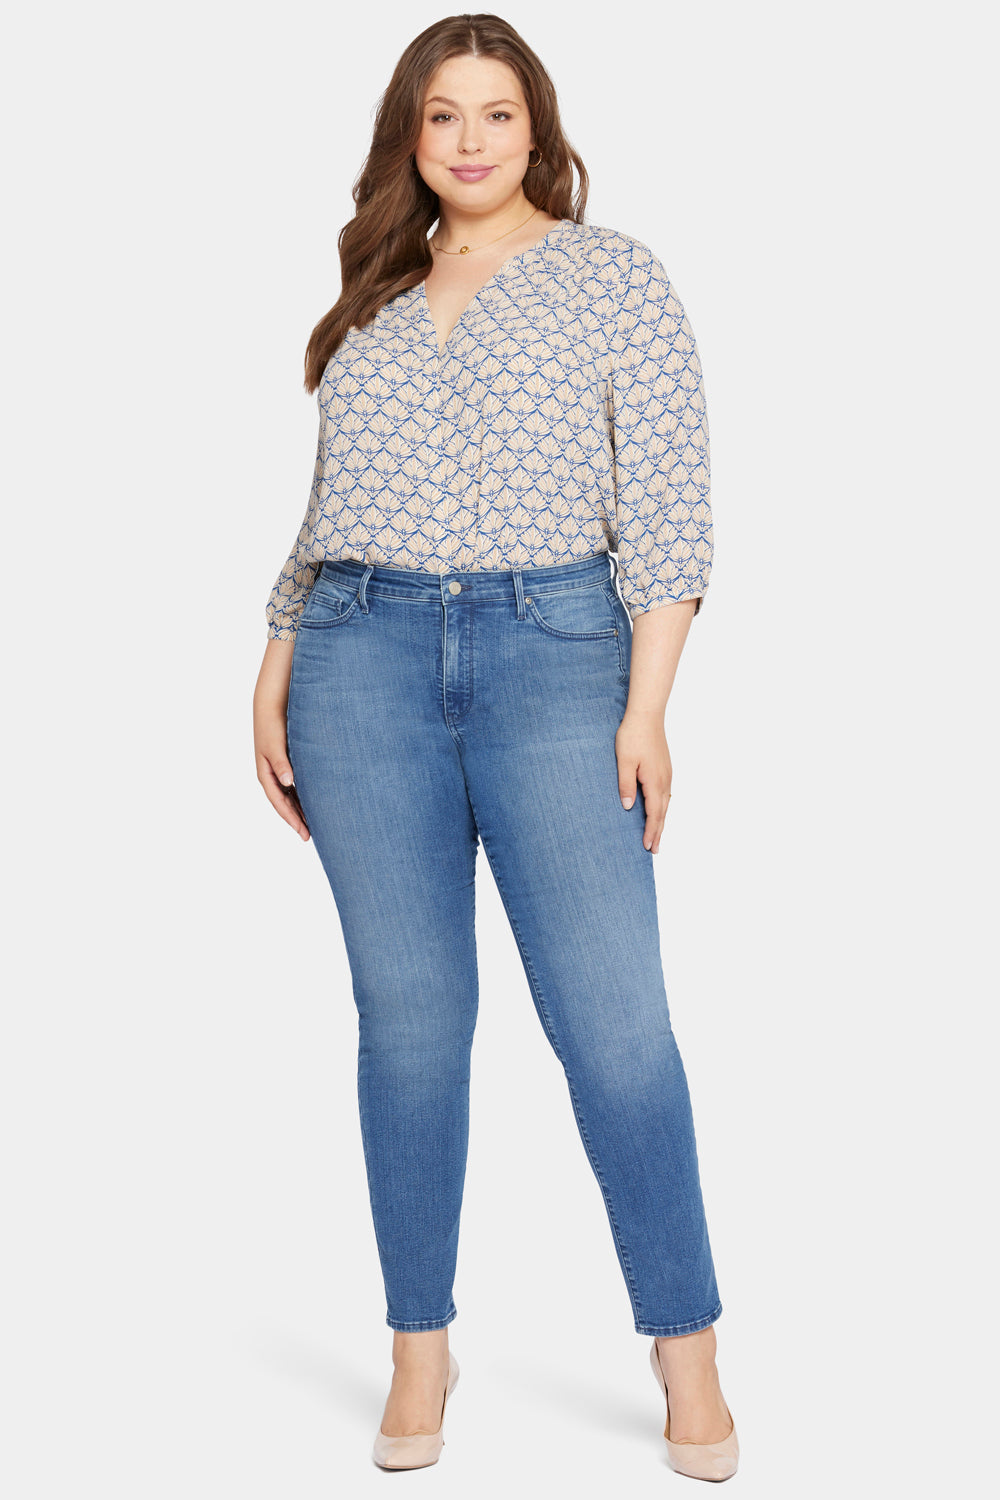 NYDJ Sheri Slim Jeans In Plus Size  - Sweetbay